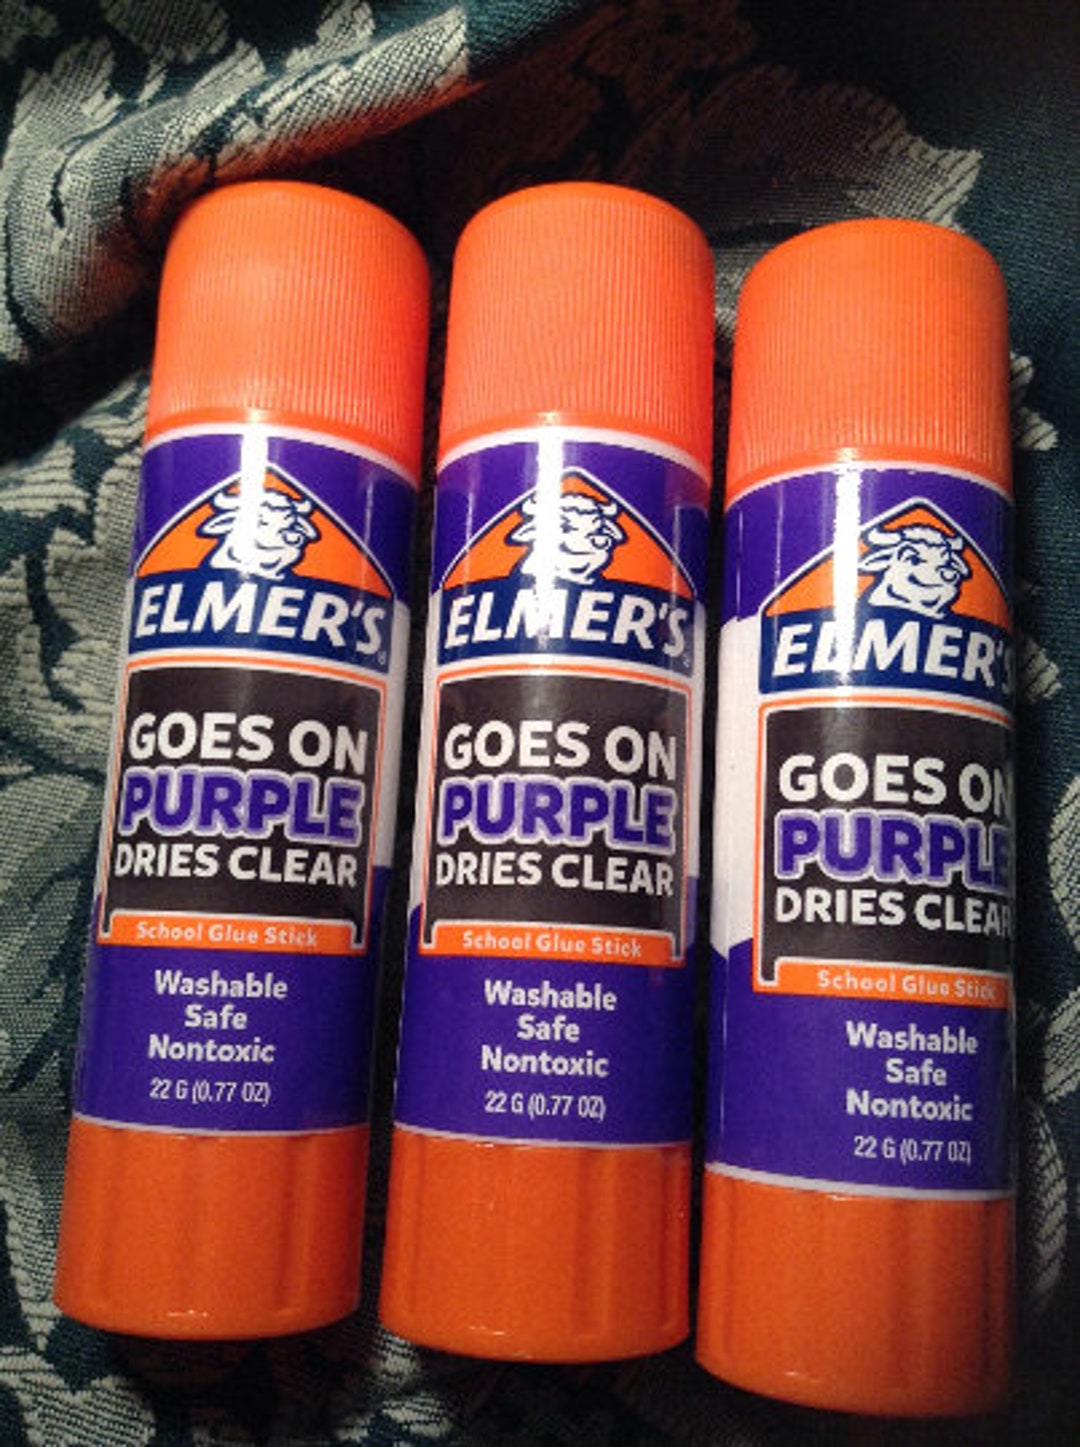  Elmer's Jumbo Disappearing Purple School Glue Stick